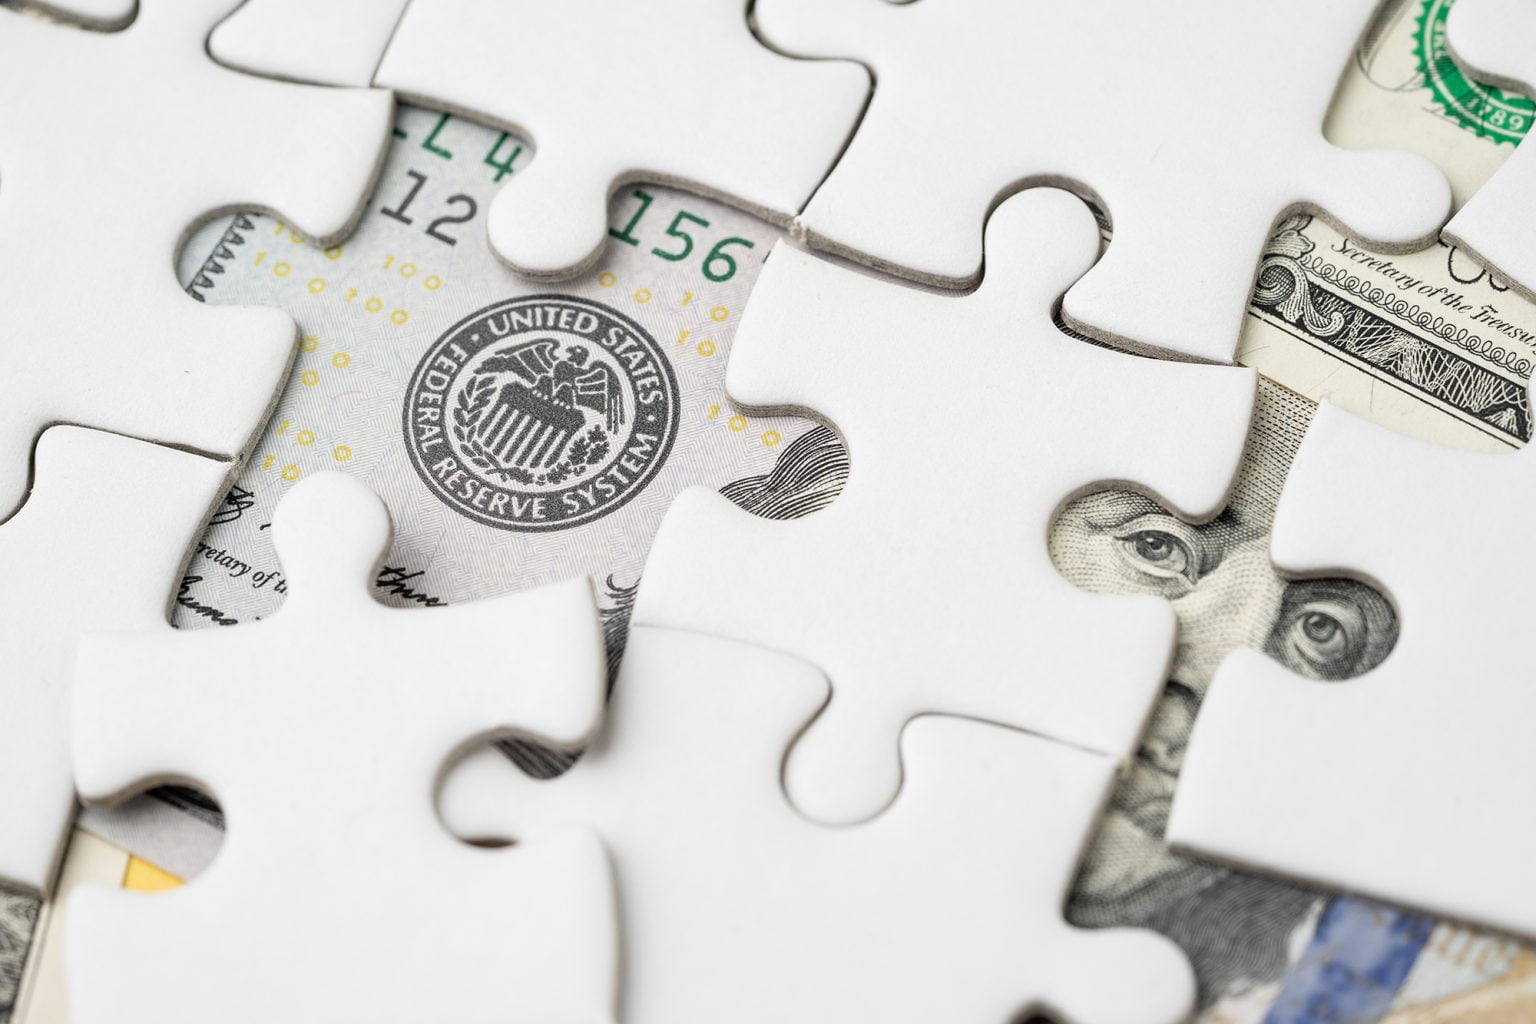 puzzle pieces reveals U.S. currency underneath